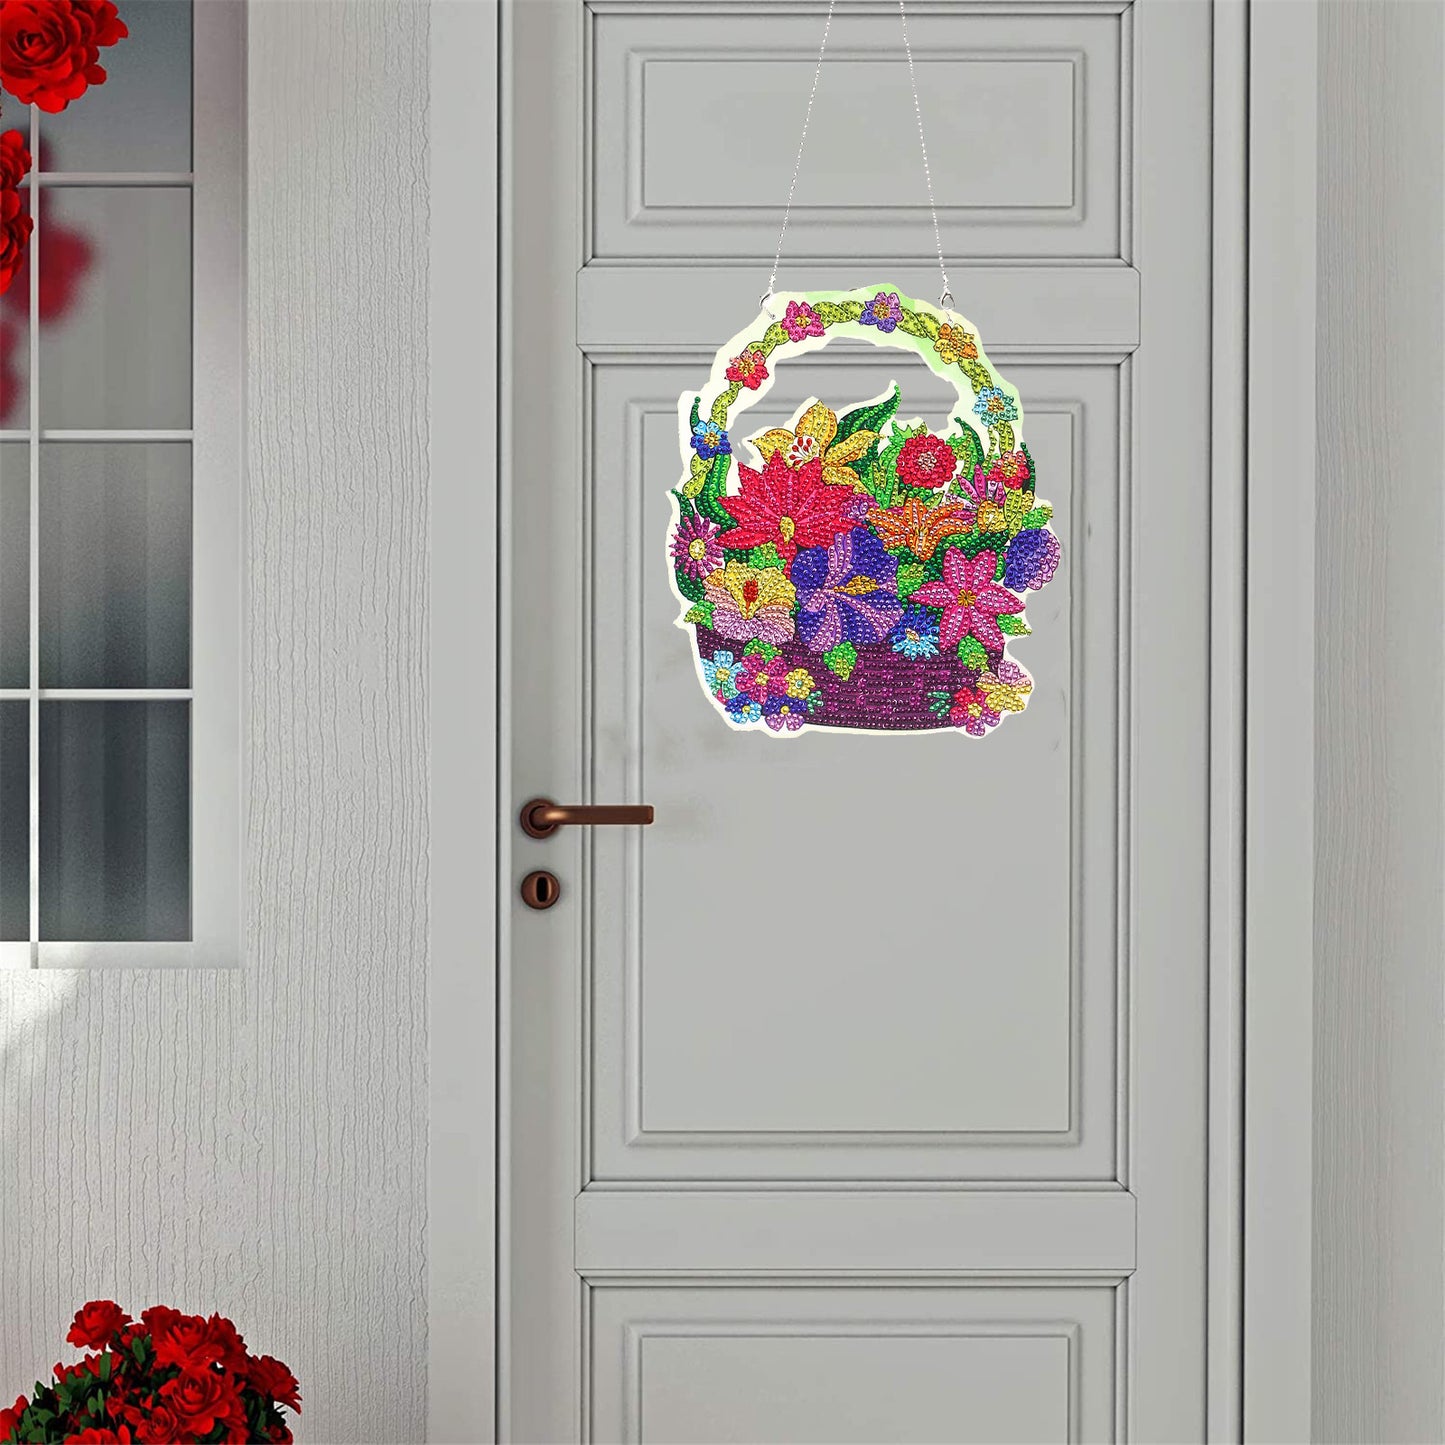 DIY Diamond Hanging Wreath Home Decor Kit | Blumenkorb